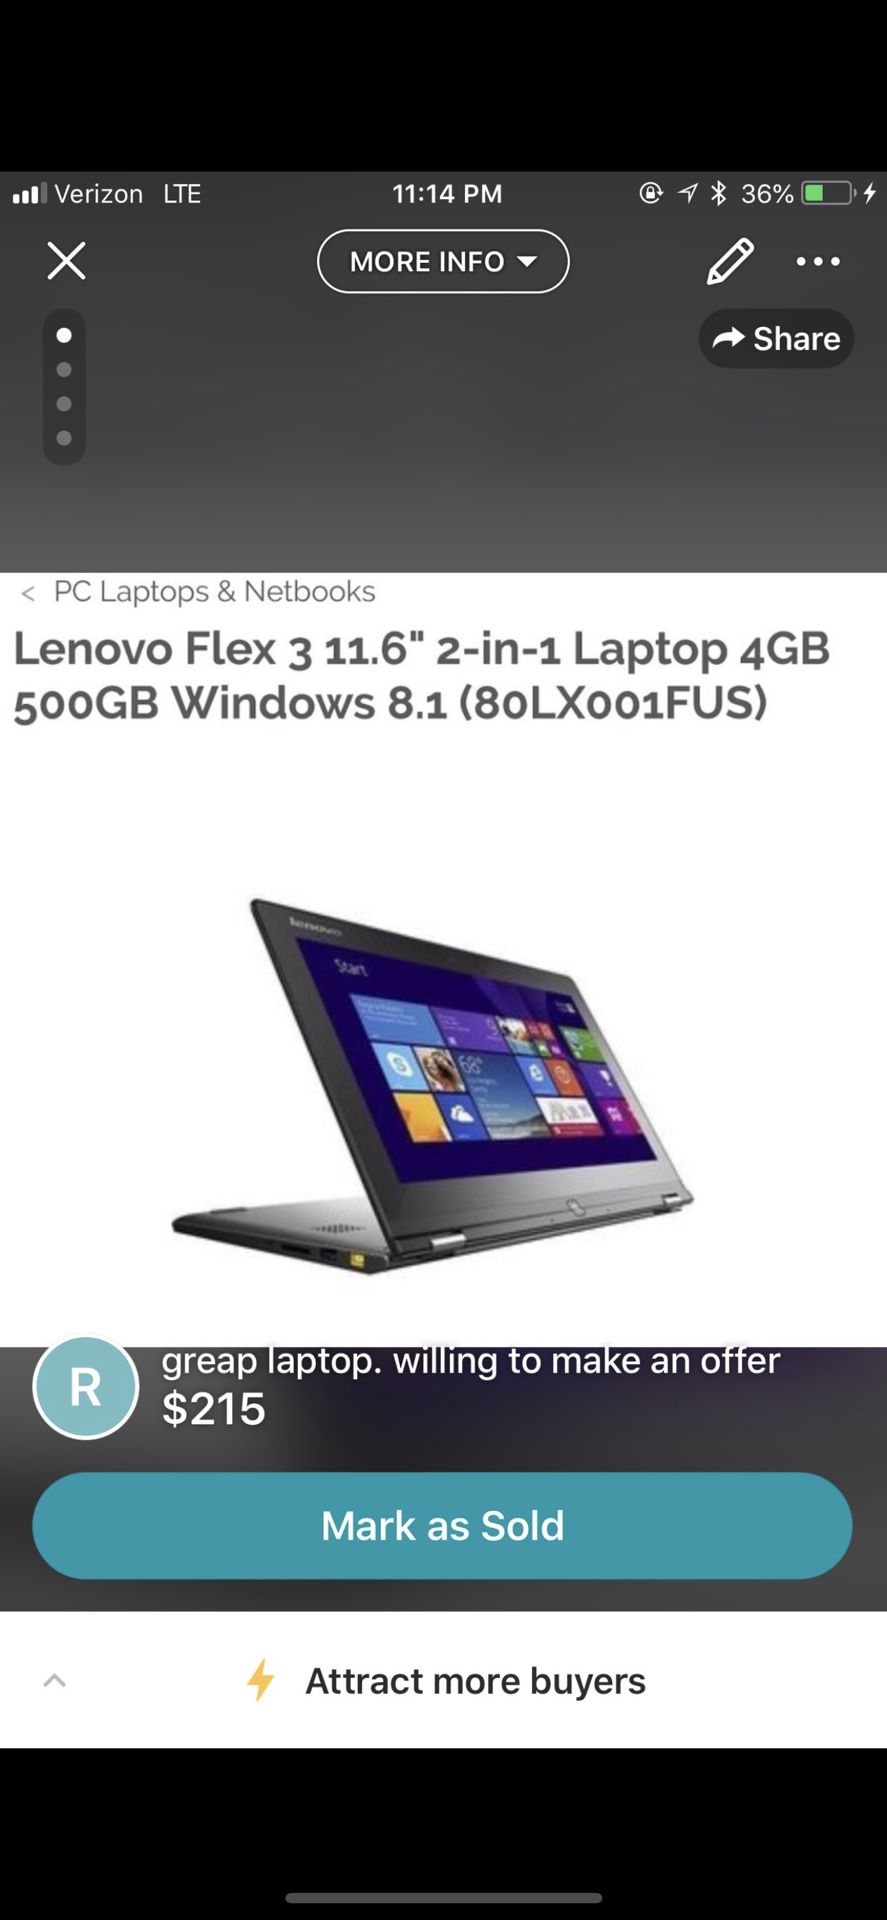 Lenovo Flex 3 11.6 2-in 1 Laptop 4GB, 500 GB Windows 8.1 (8oLXoo1FUS)